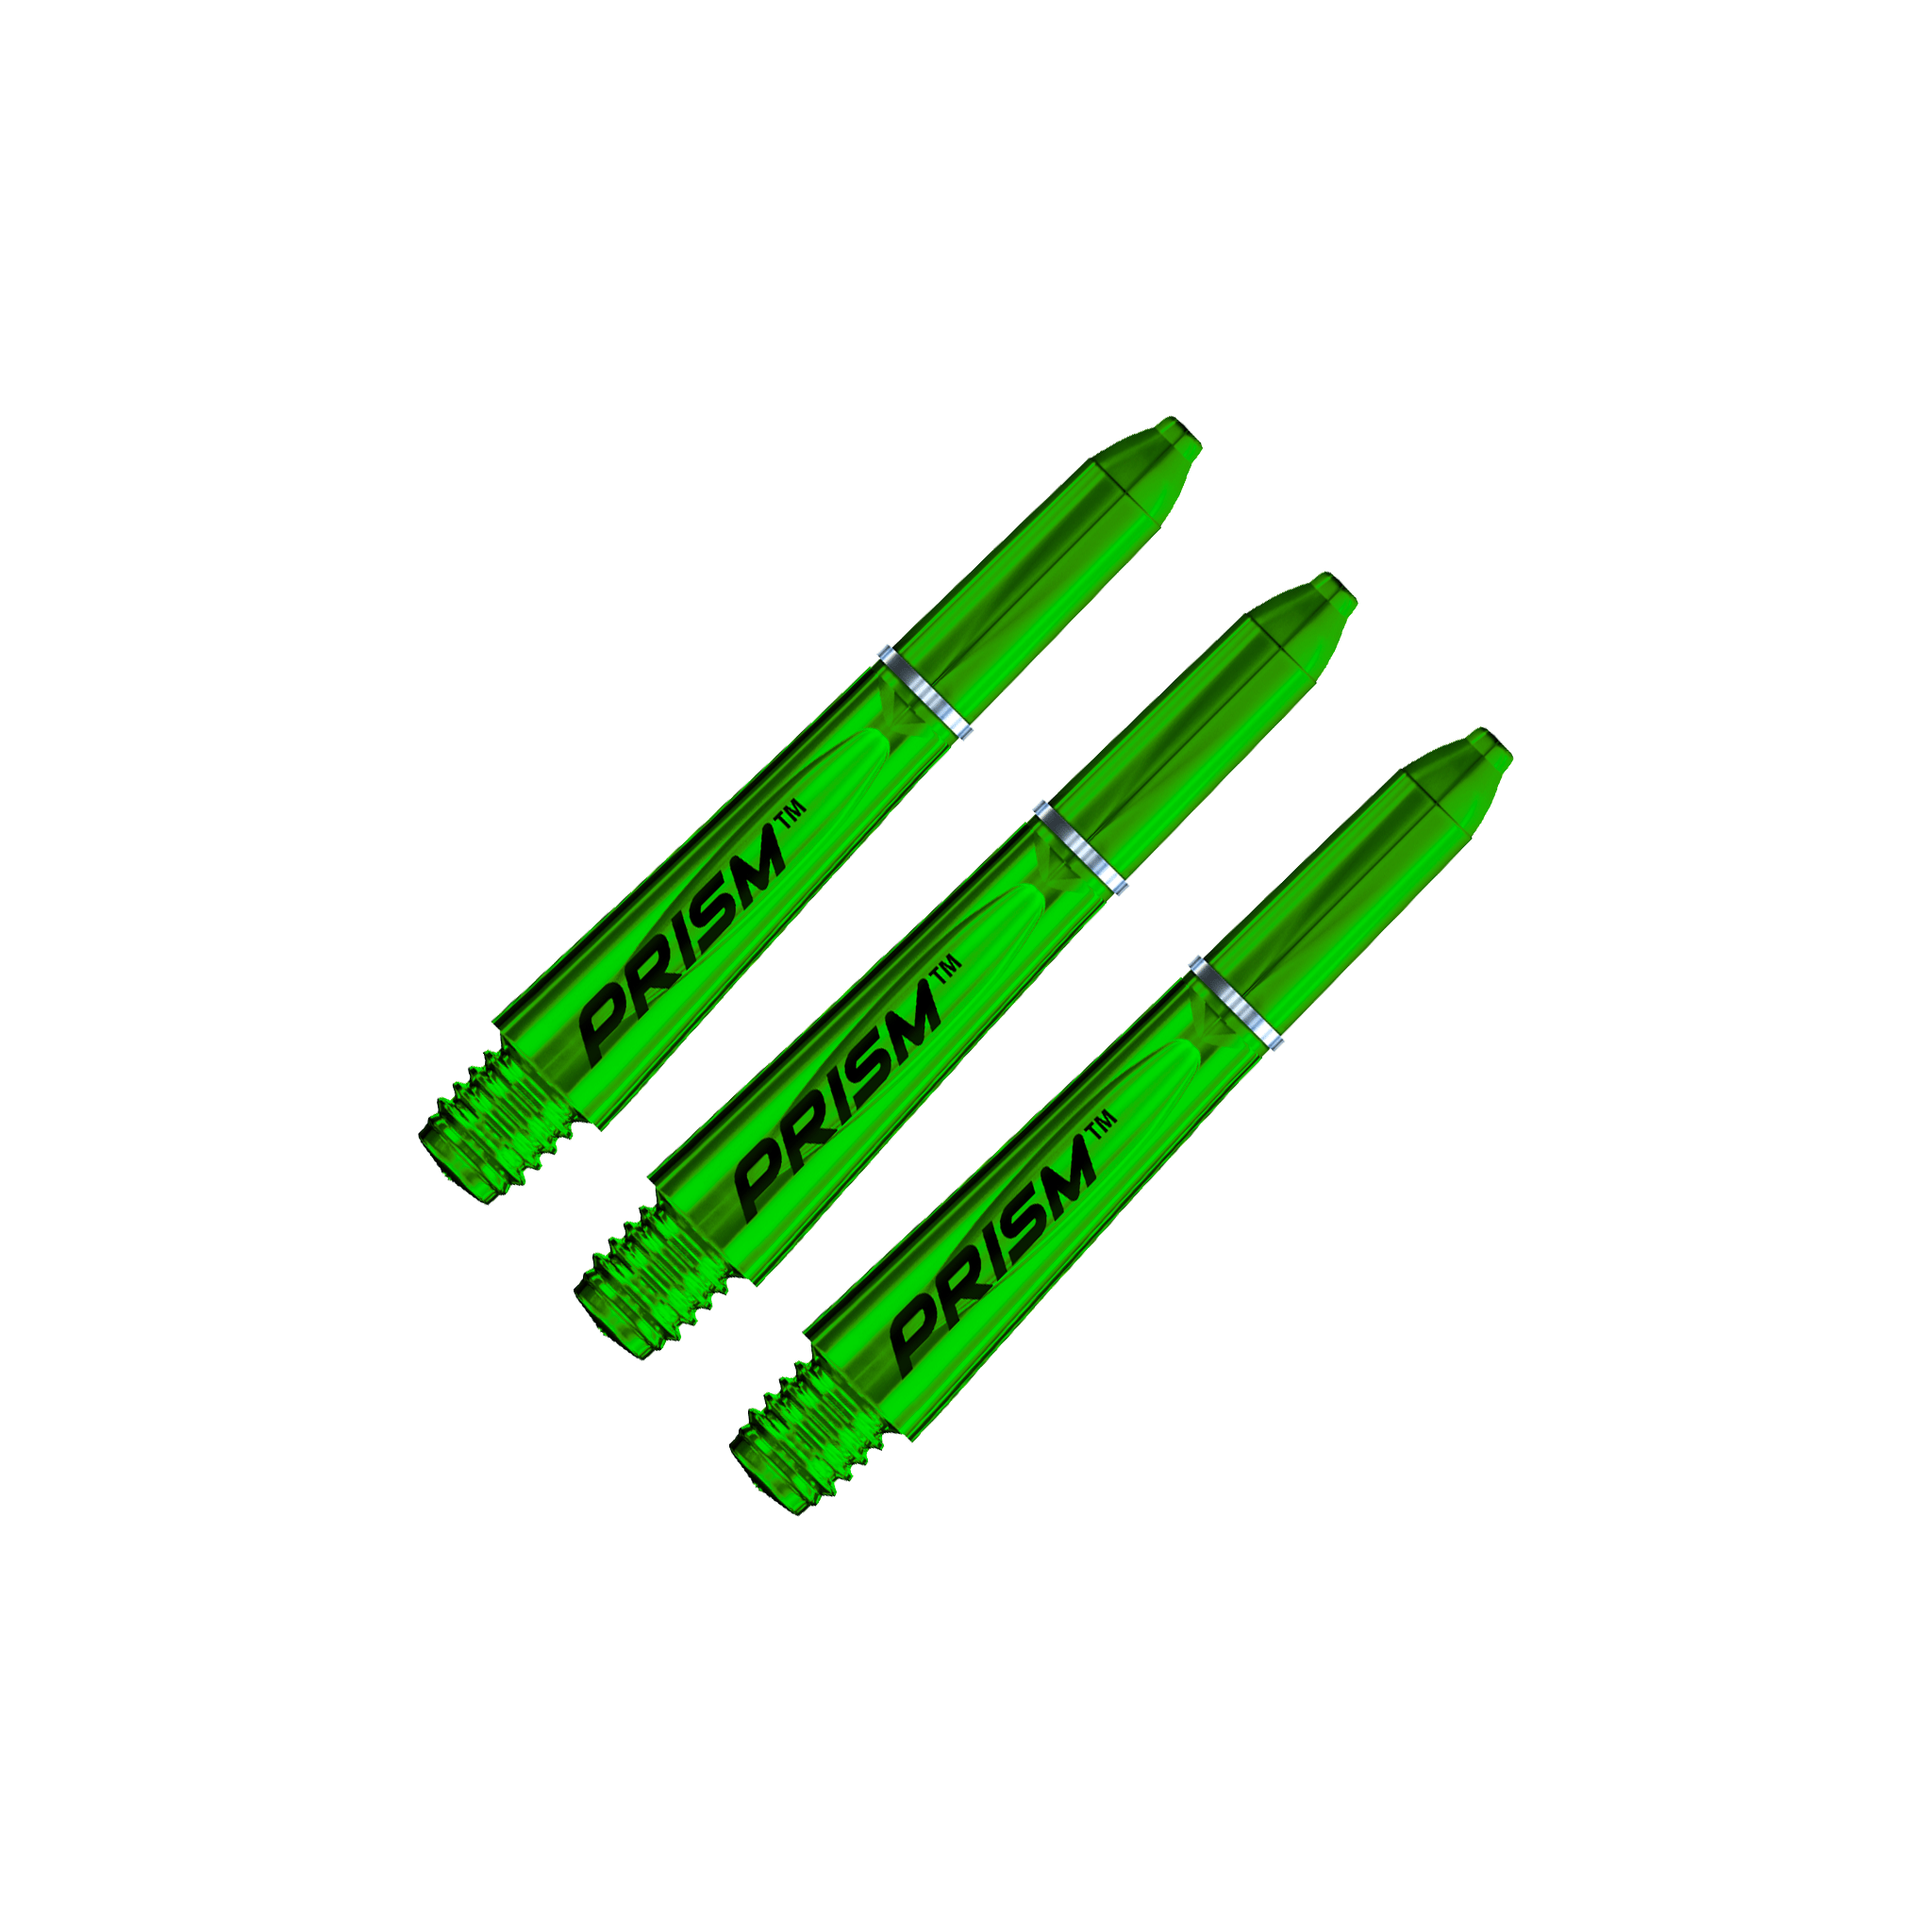 Winmau Prism 1.0 Extra Short (27mm) Polycarbonate Dart Shafts Green Shafts